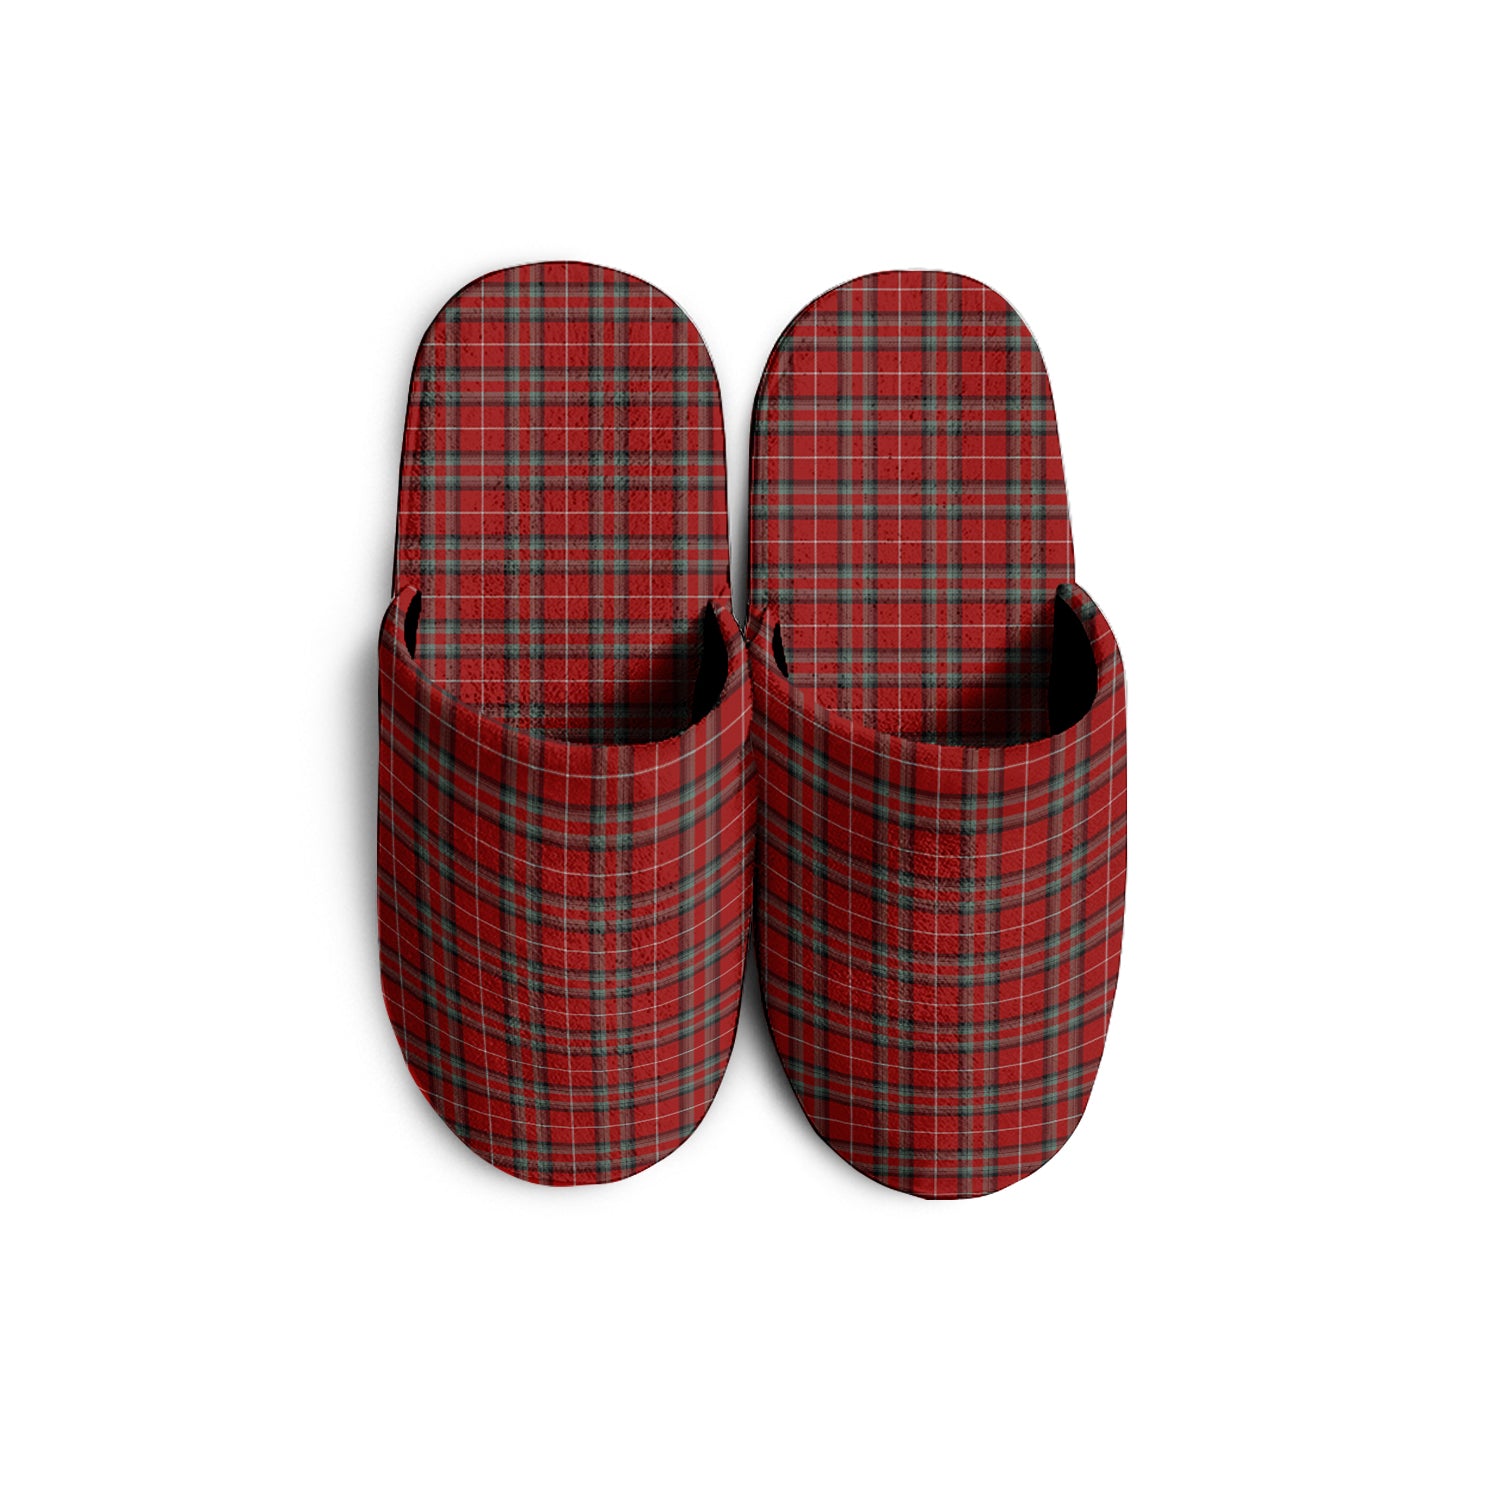 stuart-of-bute-tartan-slippers-plaid-slippers